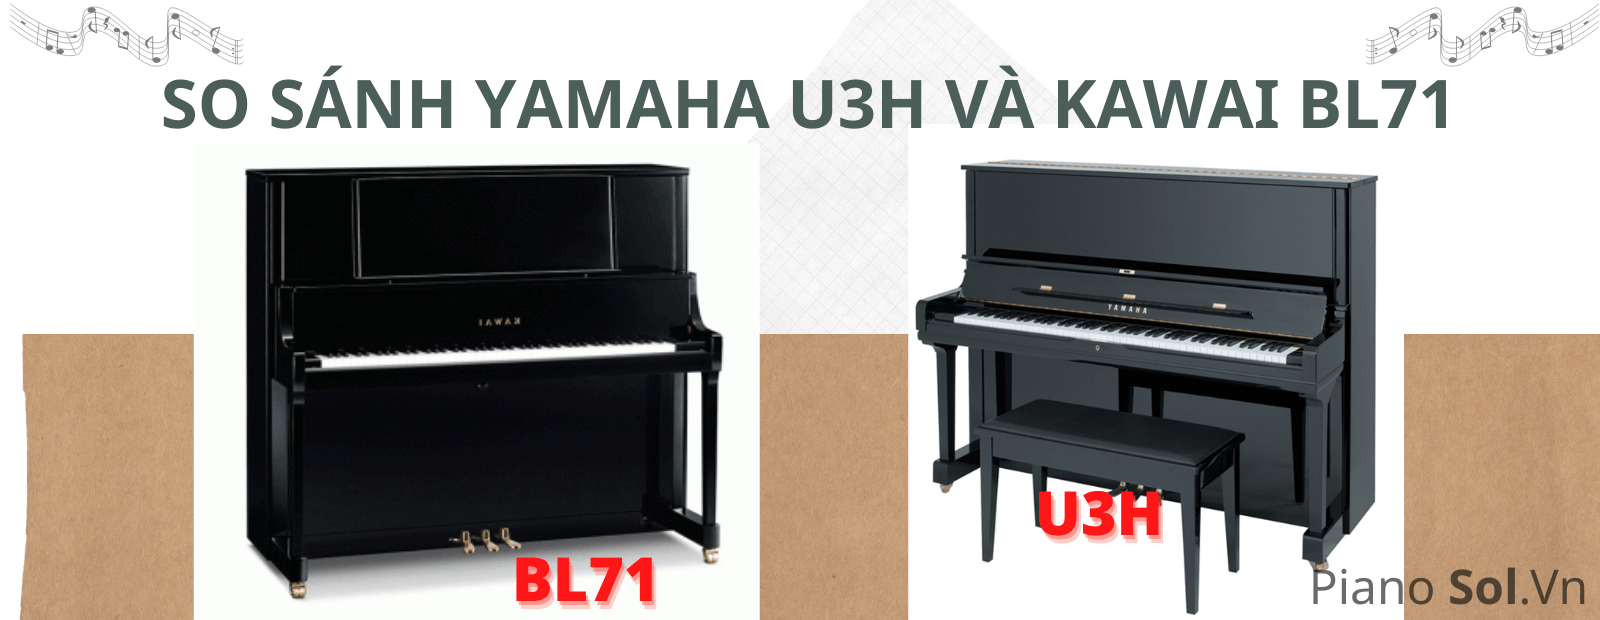 nên chọn piano yamaha u3h hay Kawai bl71